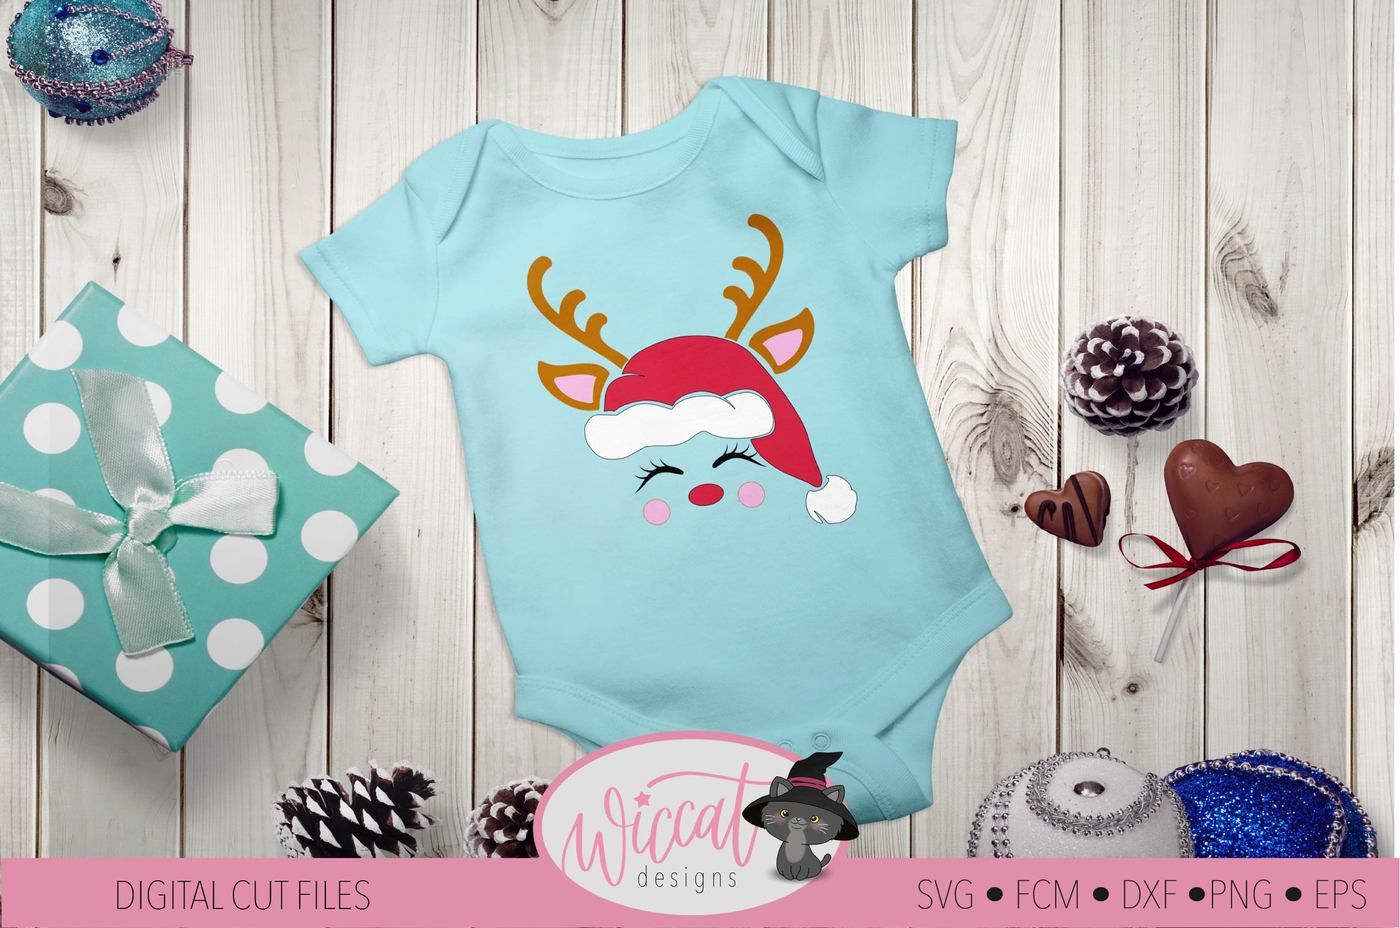 Reindeer Face Svg Hipster Deer Christmas Hat Svg Kids Svg Funny Re By Wiccatdesigns Thehungryjpeg Com